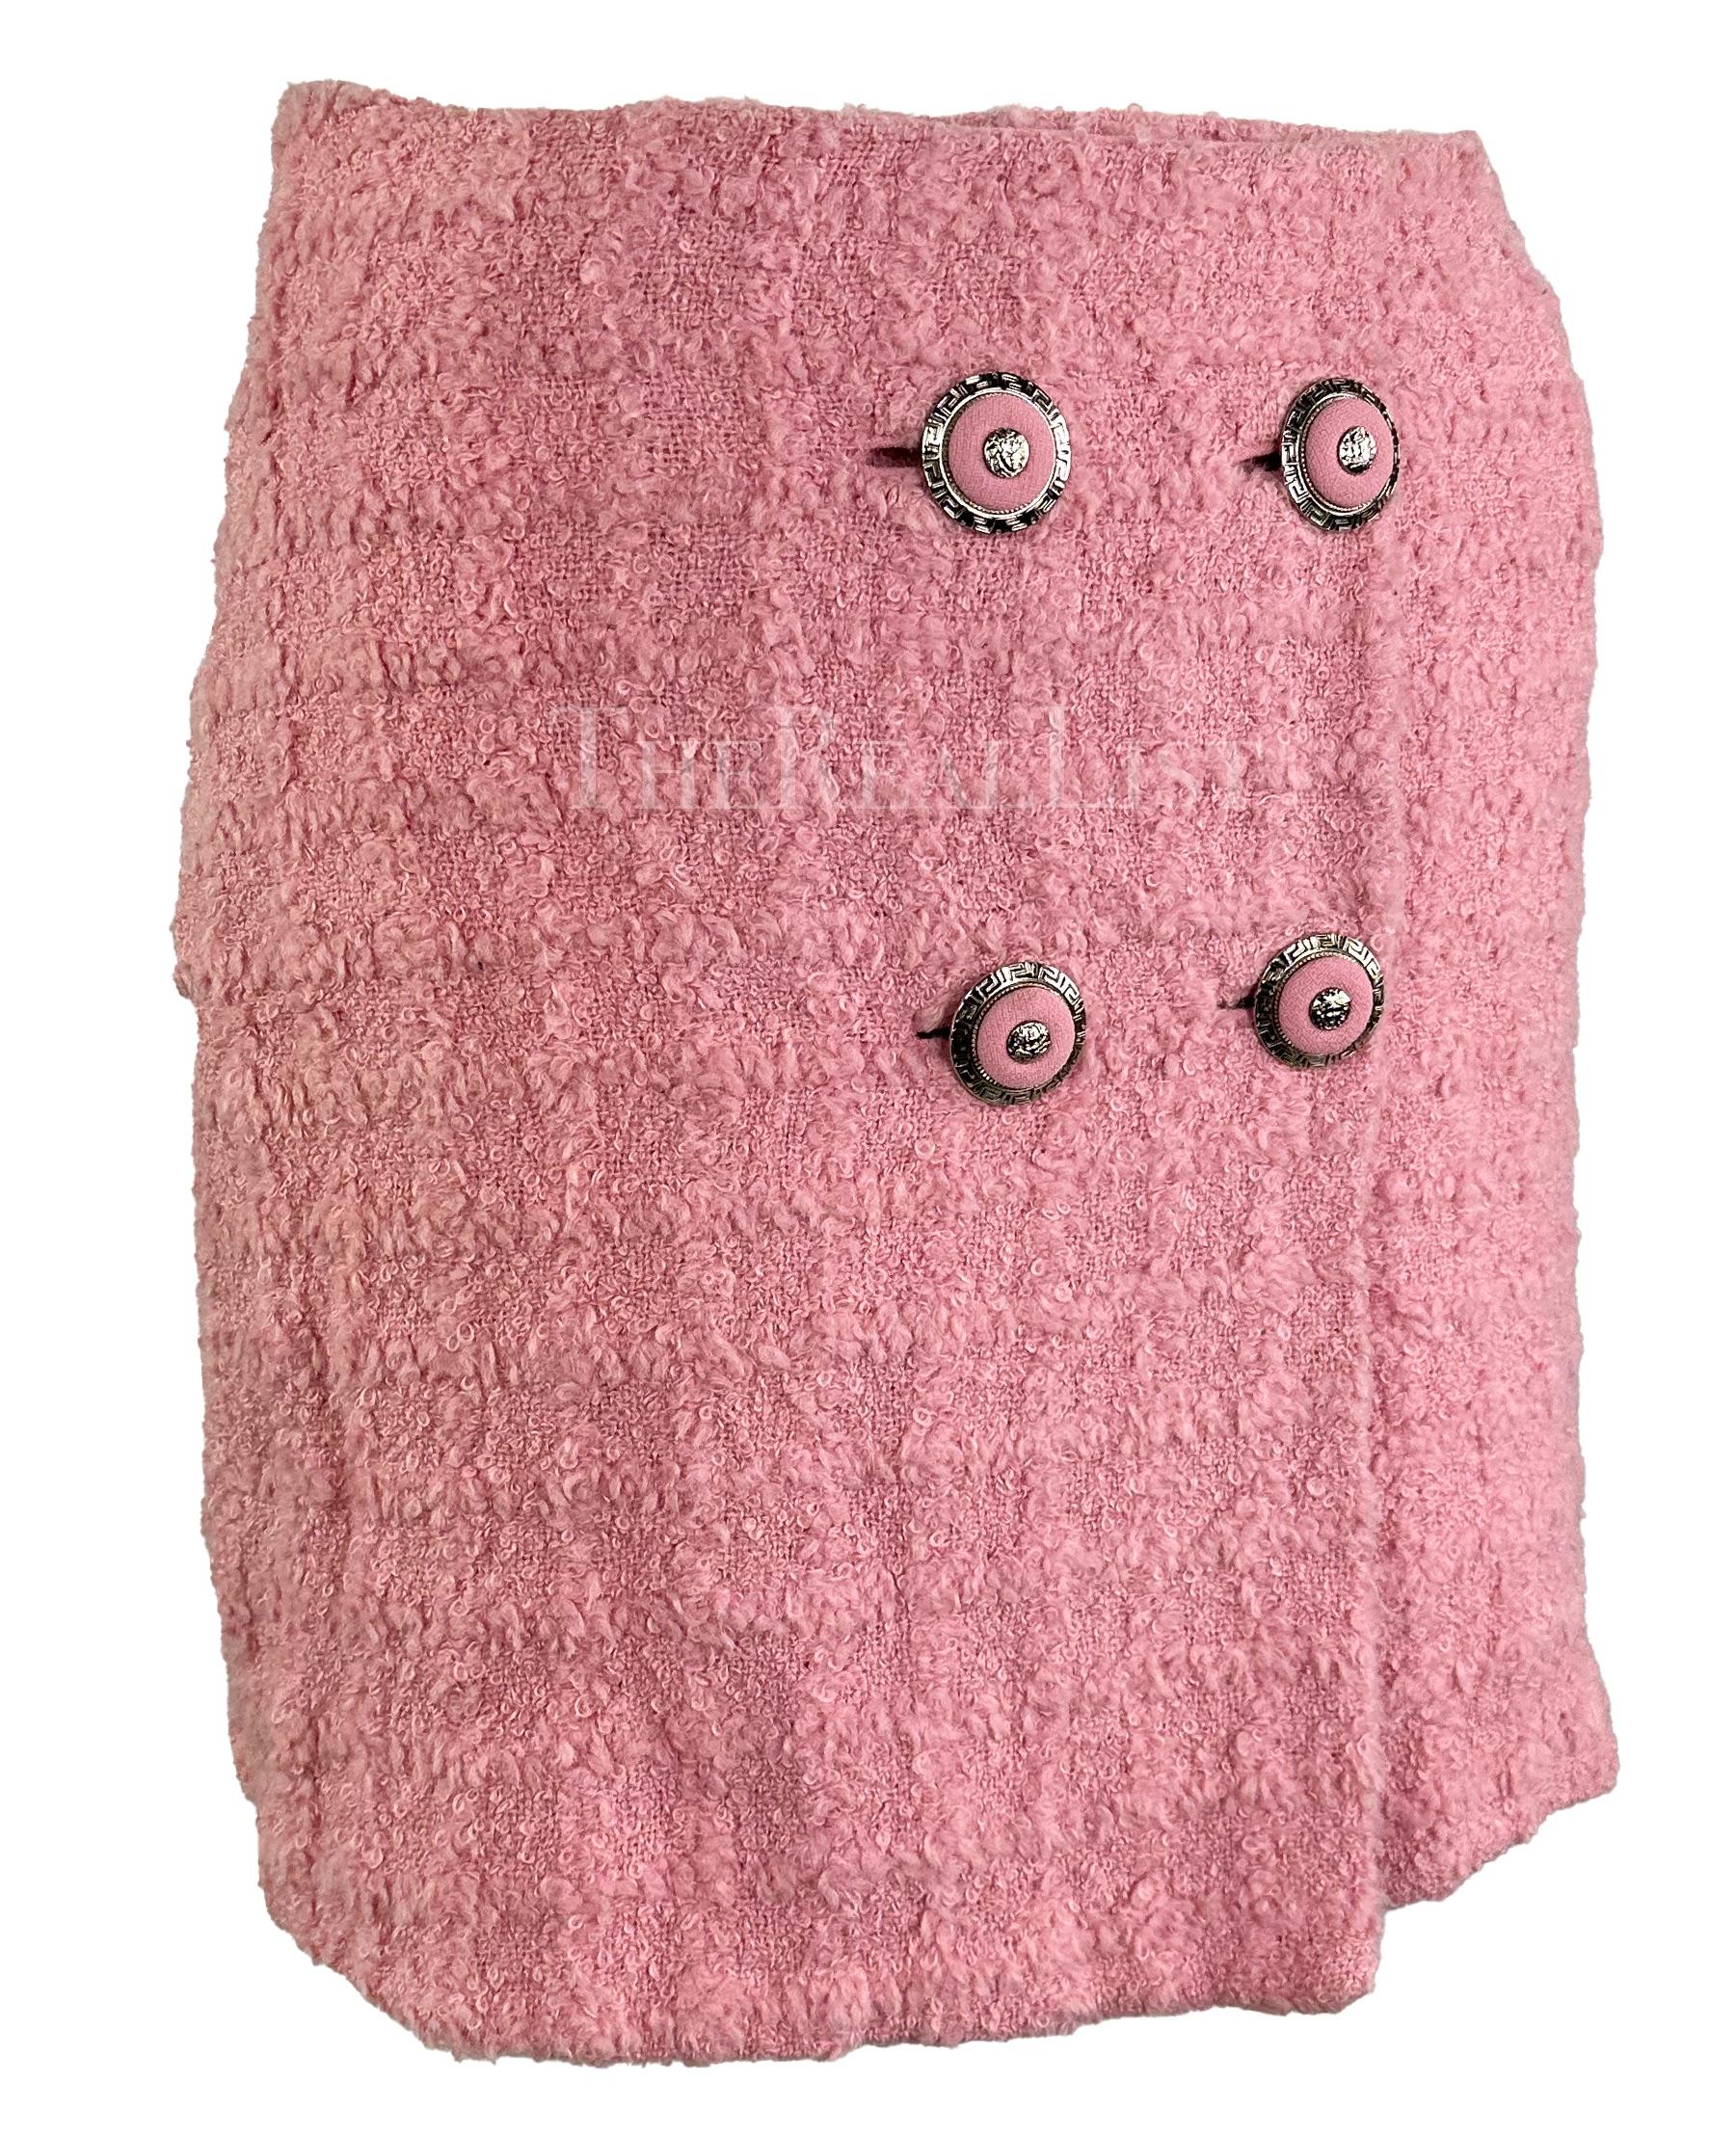 F/W 1994 Gianni Versace Pink Tweed Mini Skirt For Sale 5